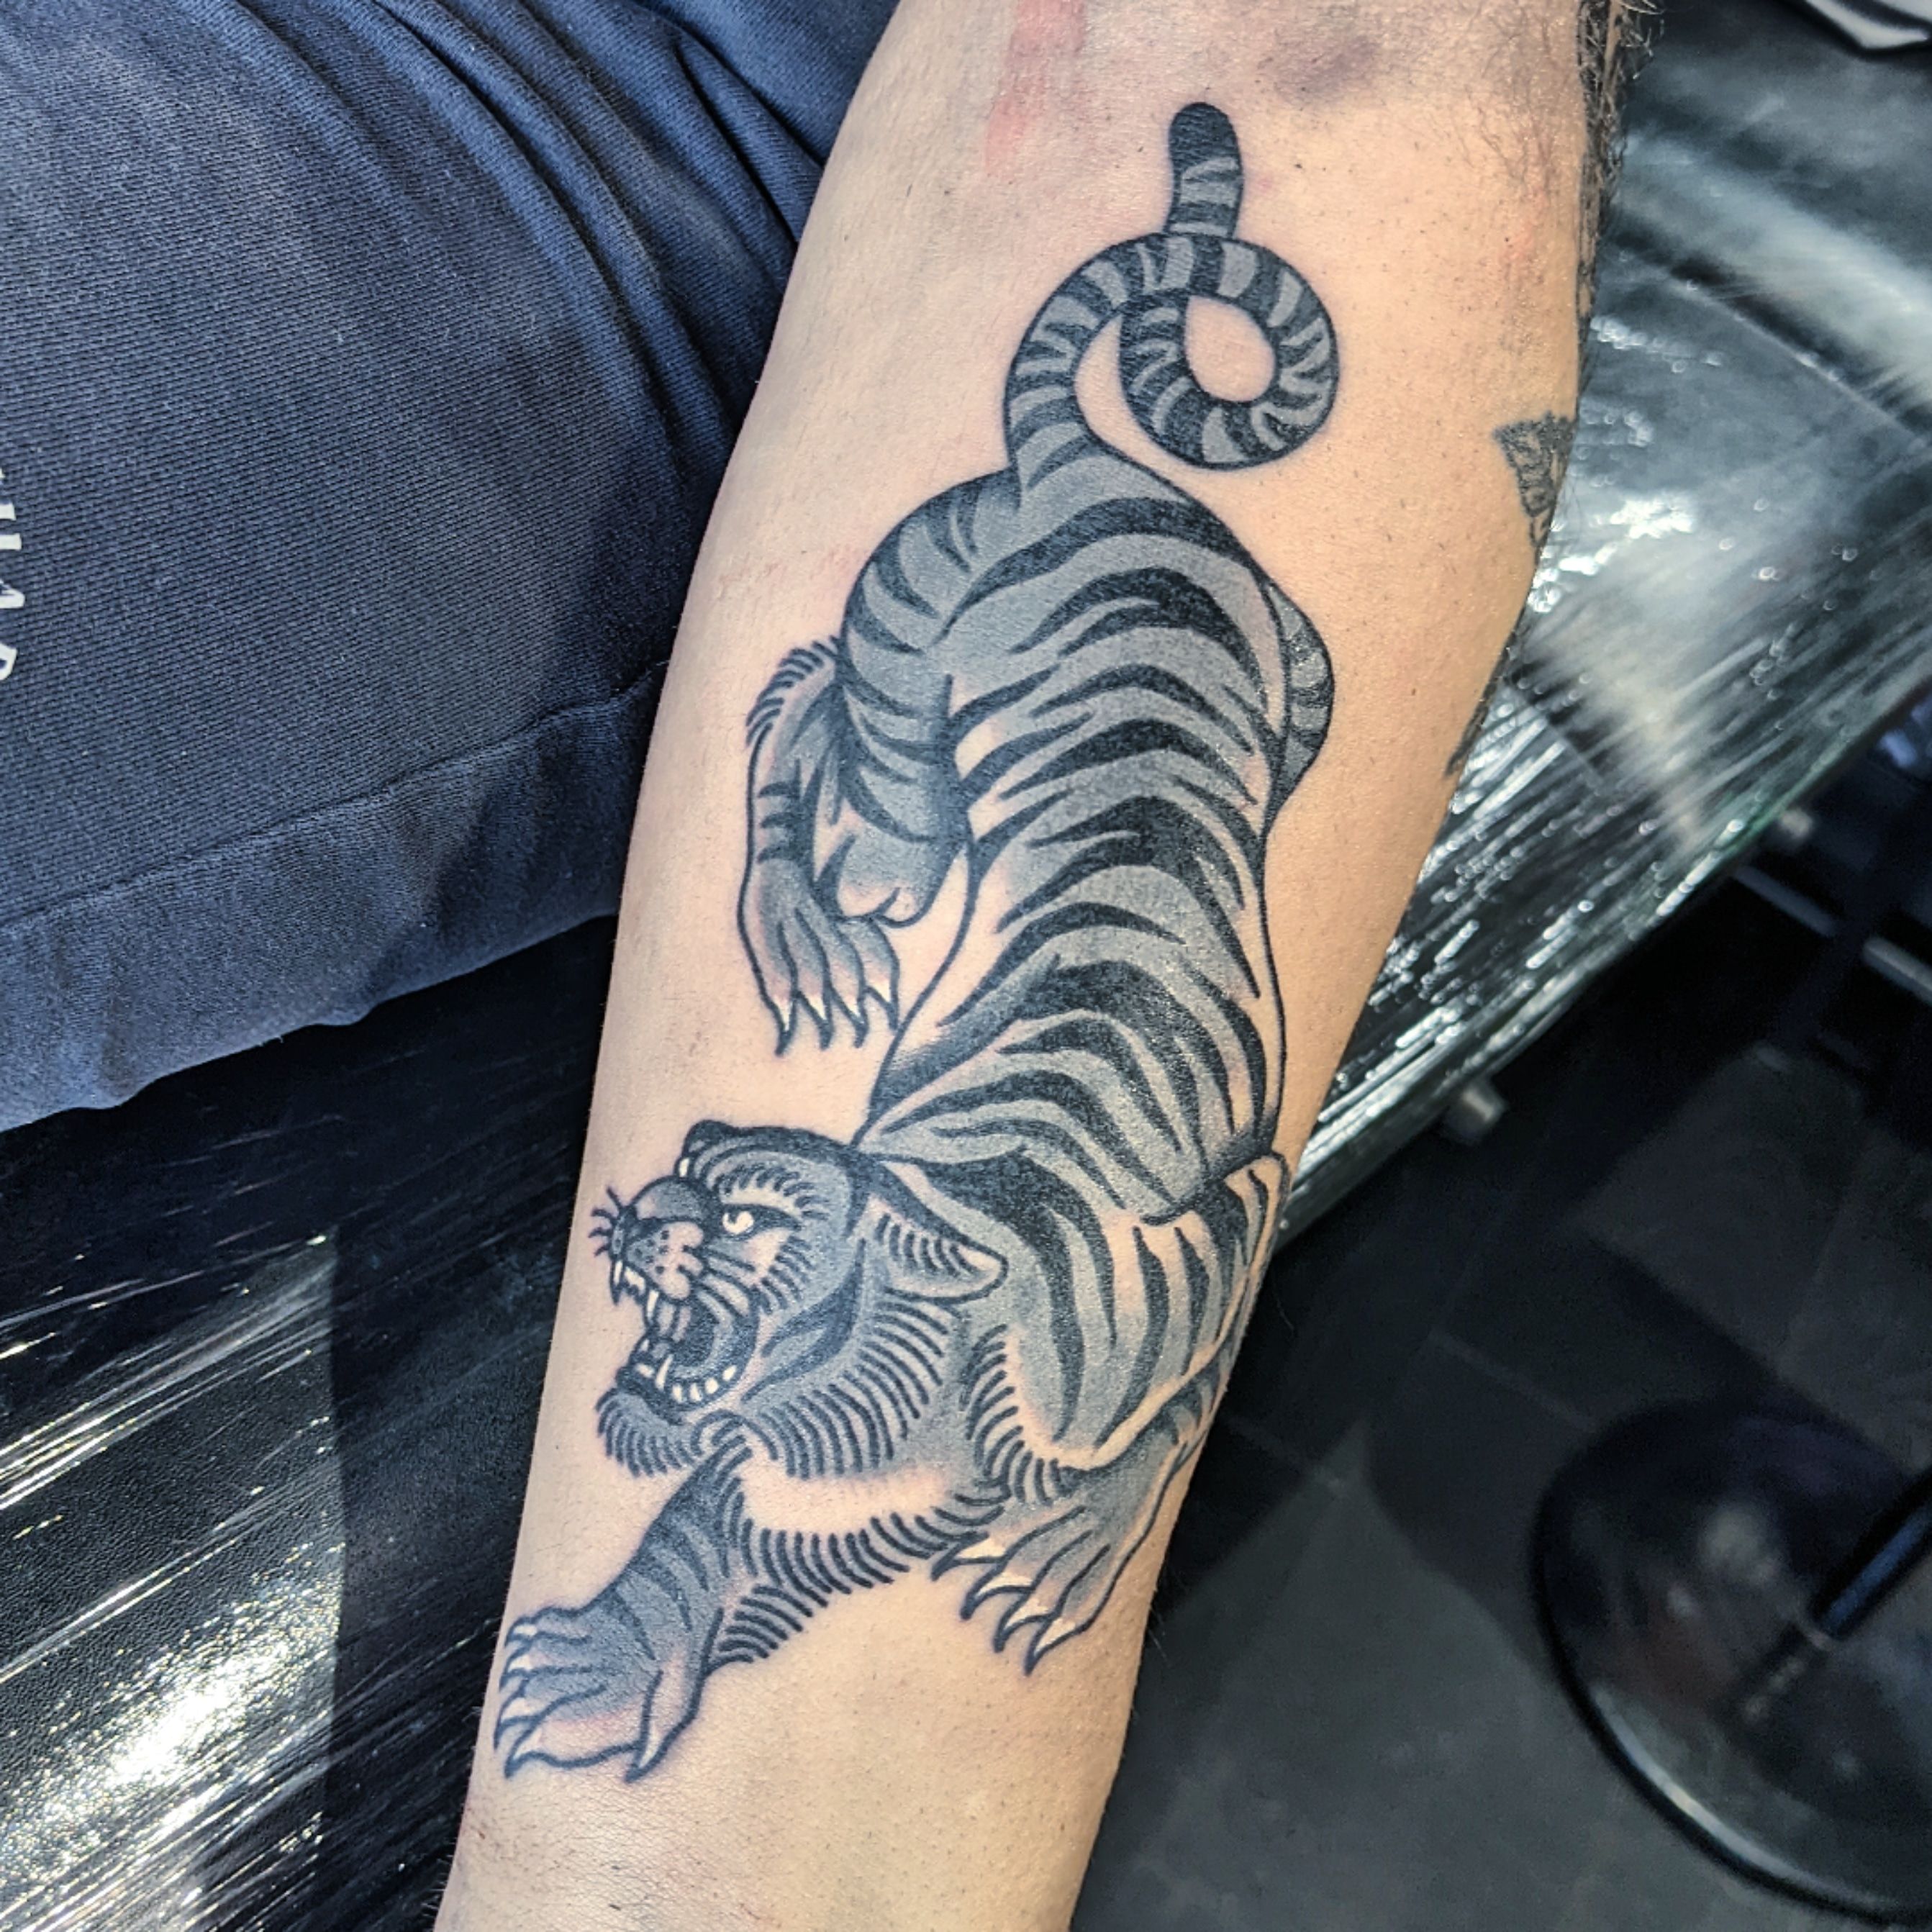 Tiger Tattoo | Temporary Tattoos - minink